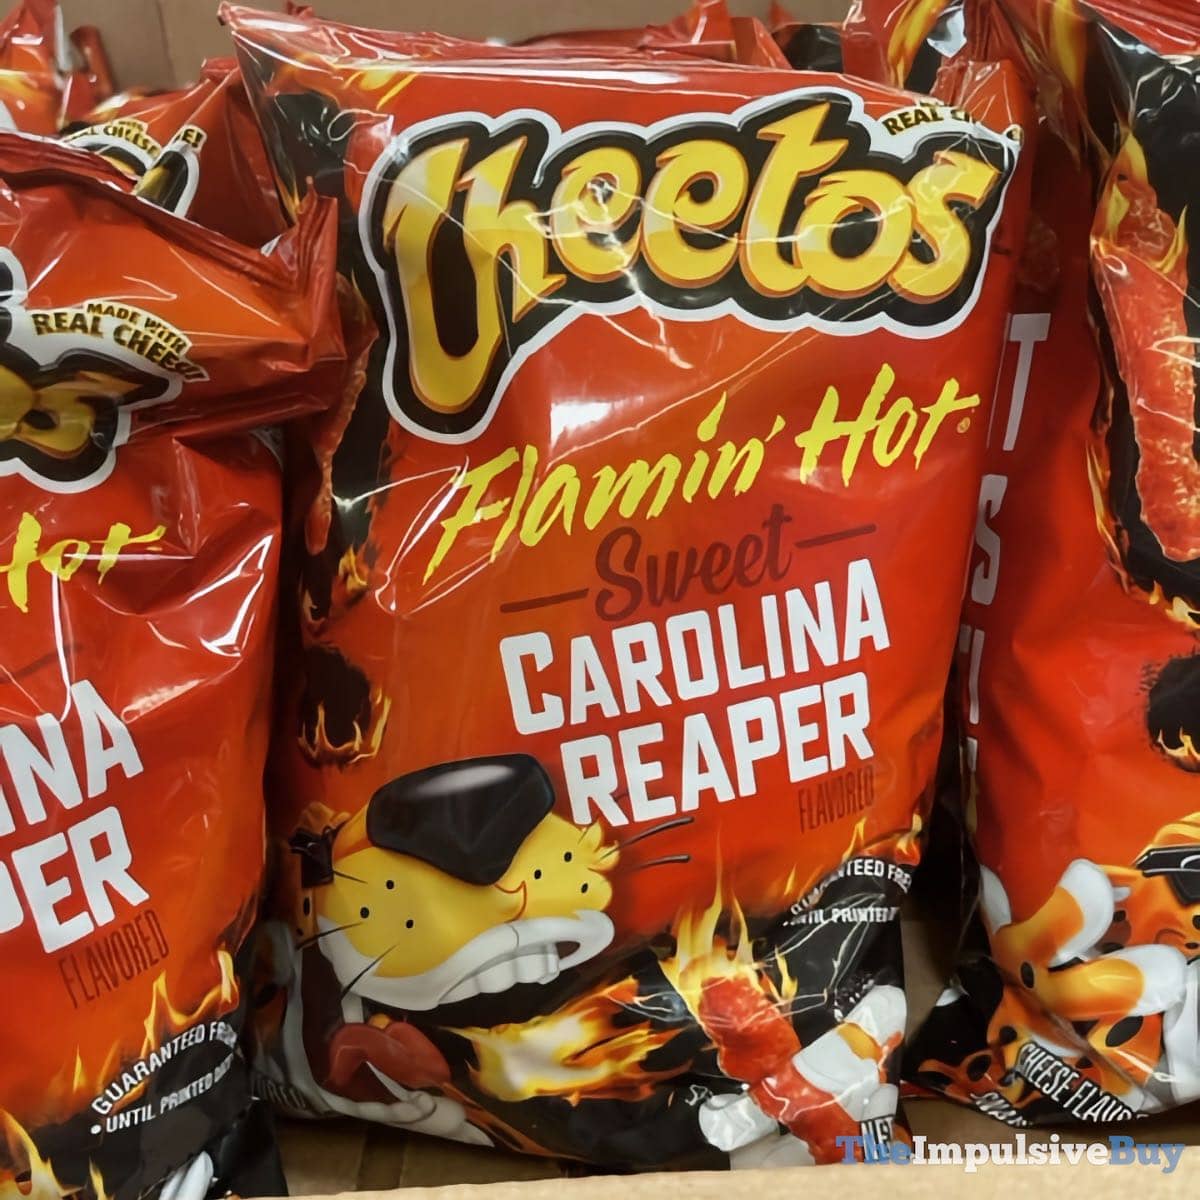 SPOTTED: Cheetos Flamin' Hot Sweet Carolina Reaper - The Impulsive Buy